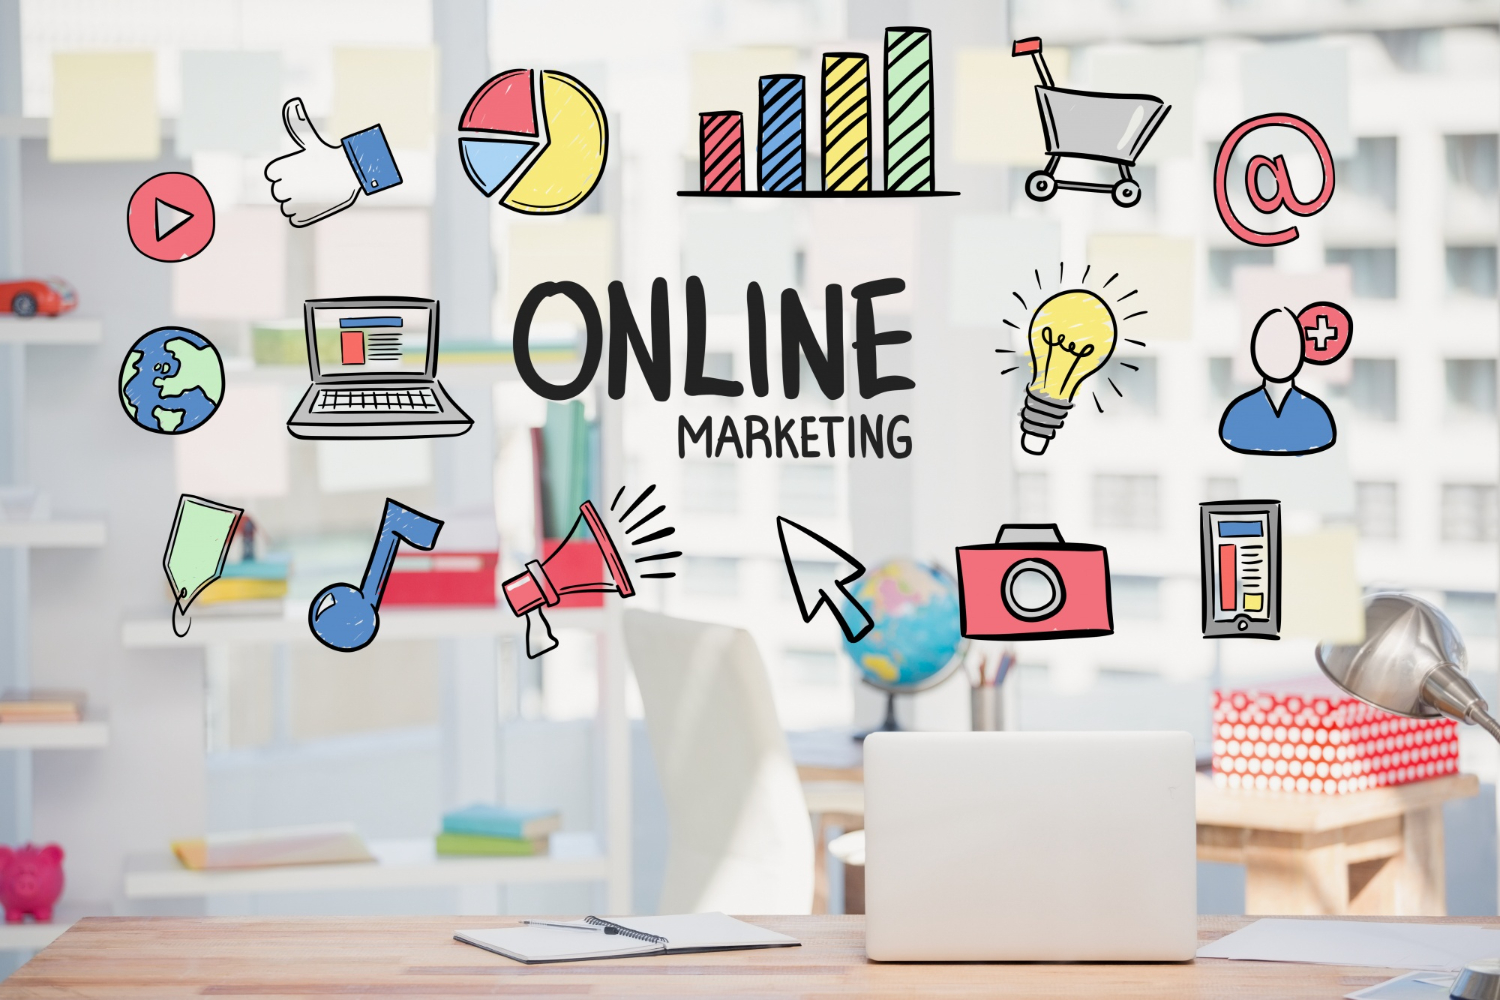 Online Marketing Trends